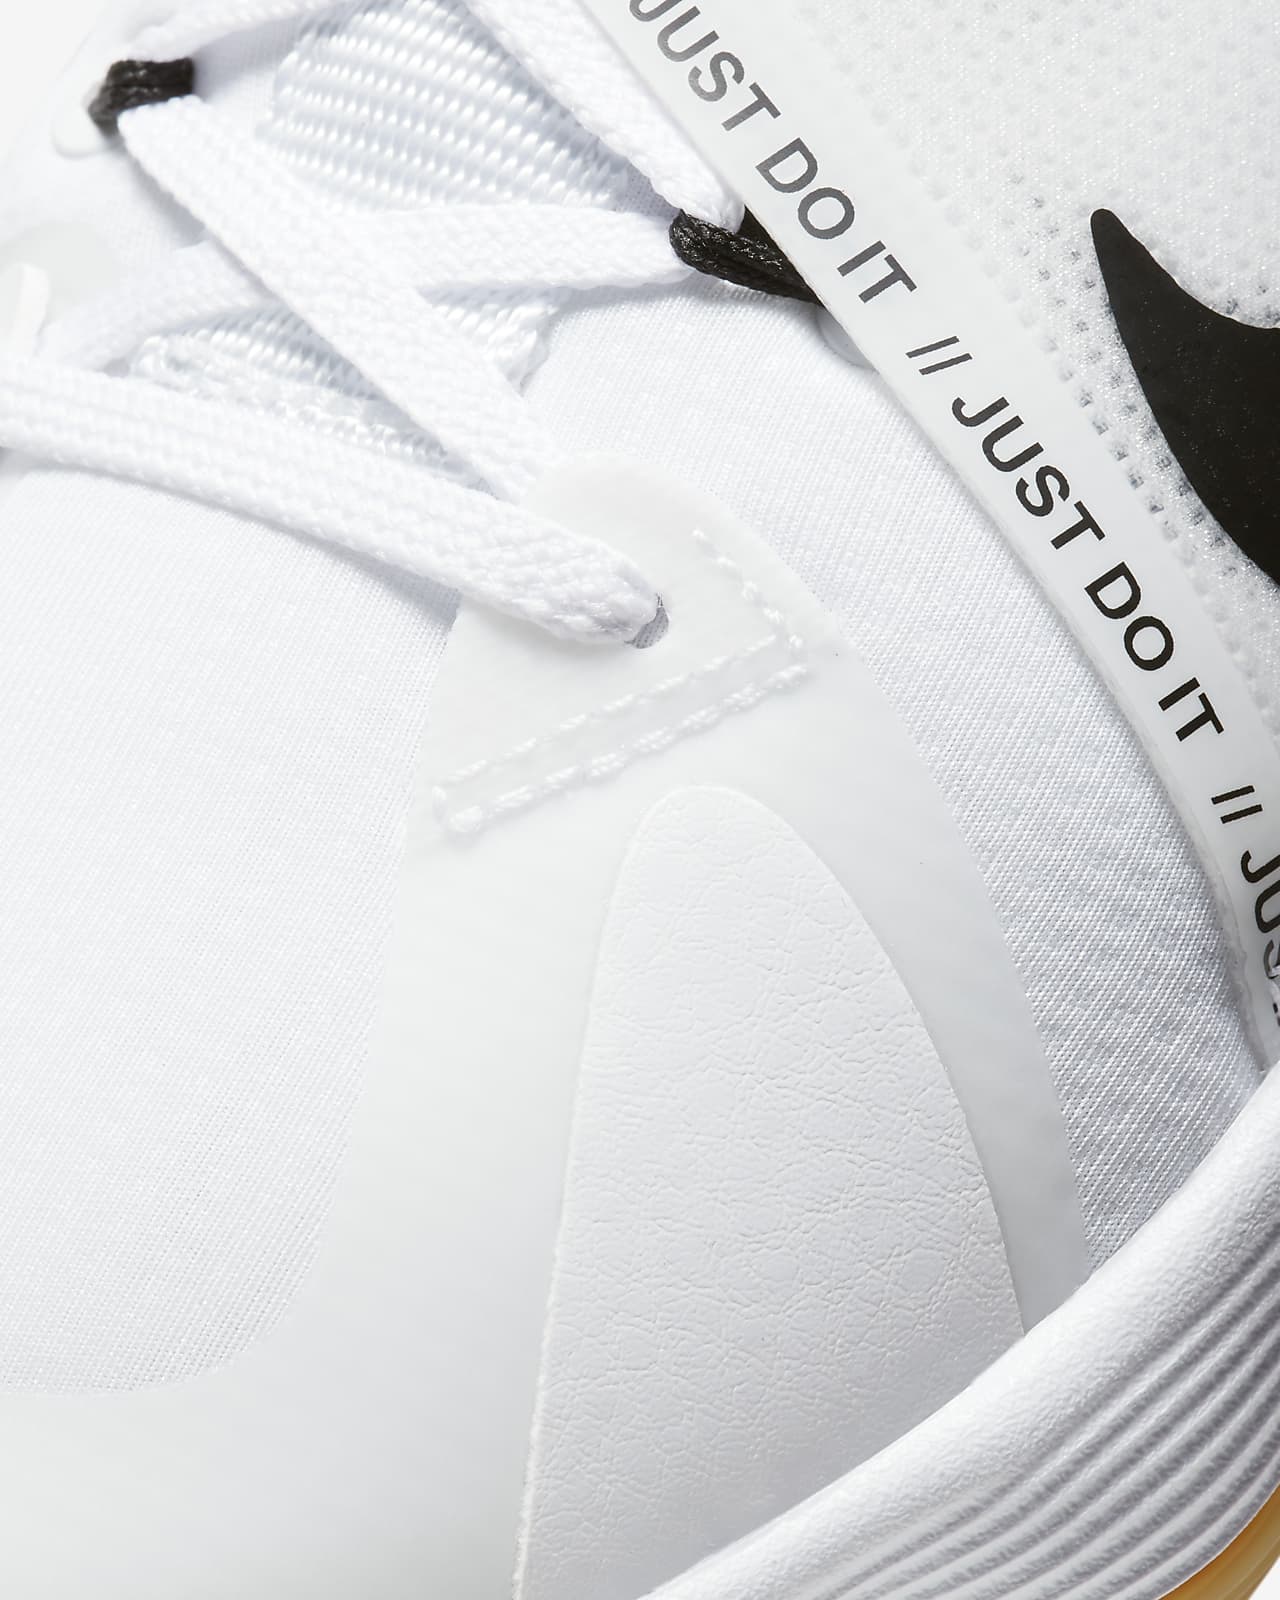 Nike React HyperSet Indoor Court Shoes.